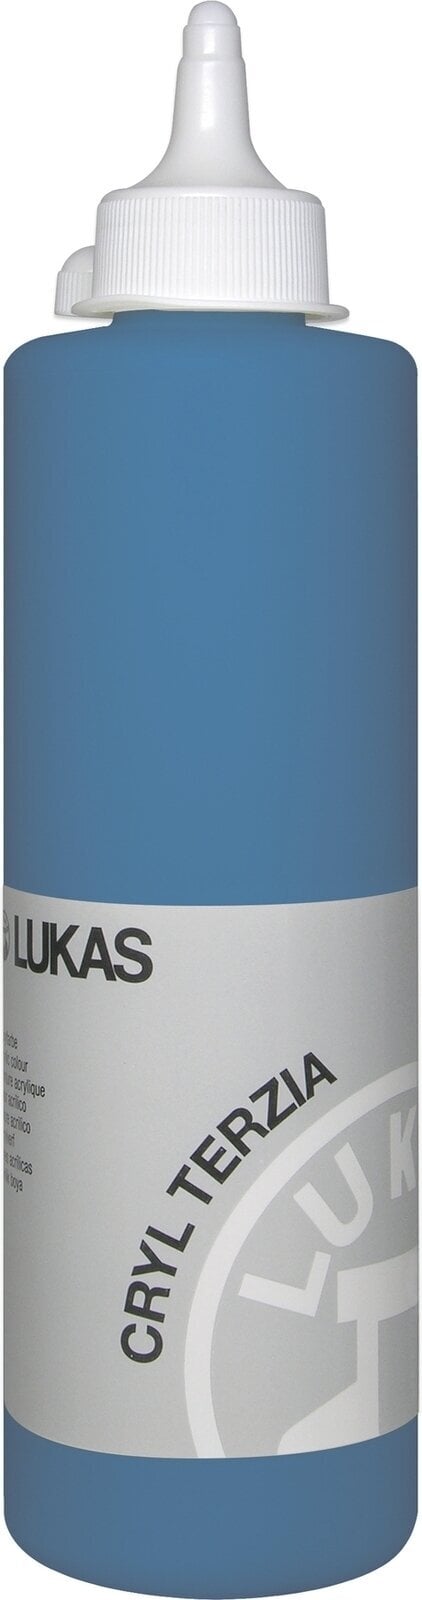 Akrylová farba Lukas Cryl Terzia Acrylic Paint Plastic Bottle Akrylová farba Cerulean Blue 500 ml 1 ks